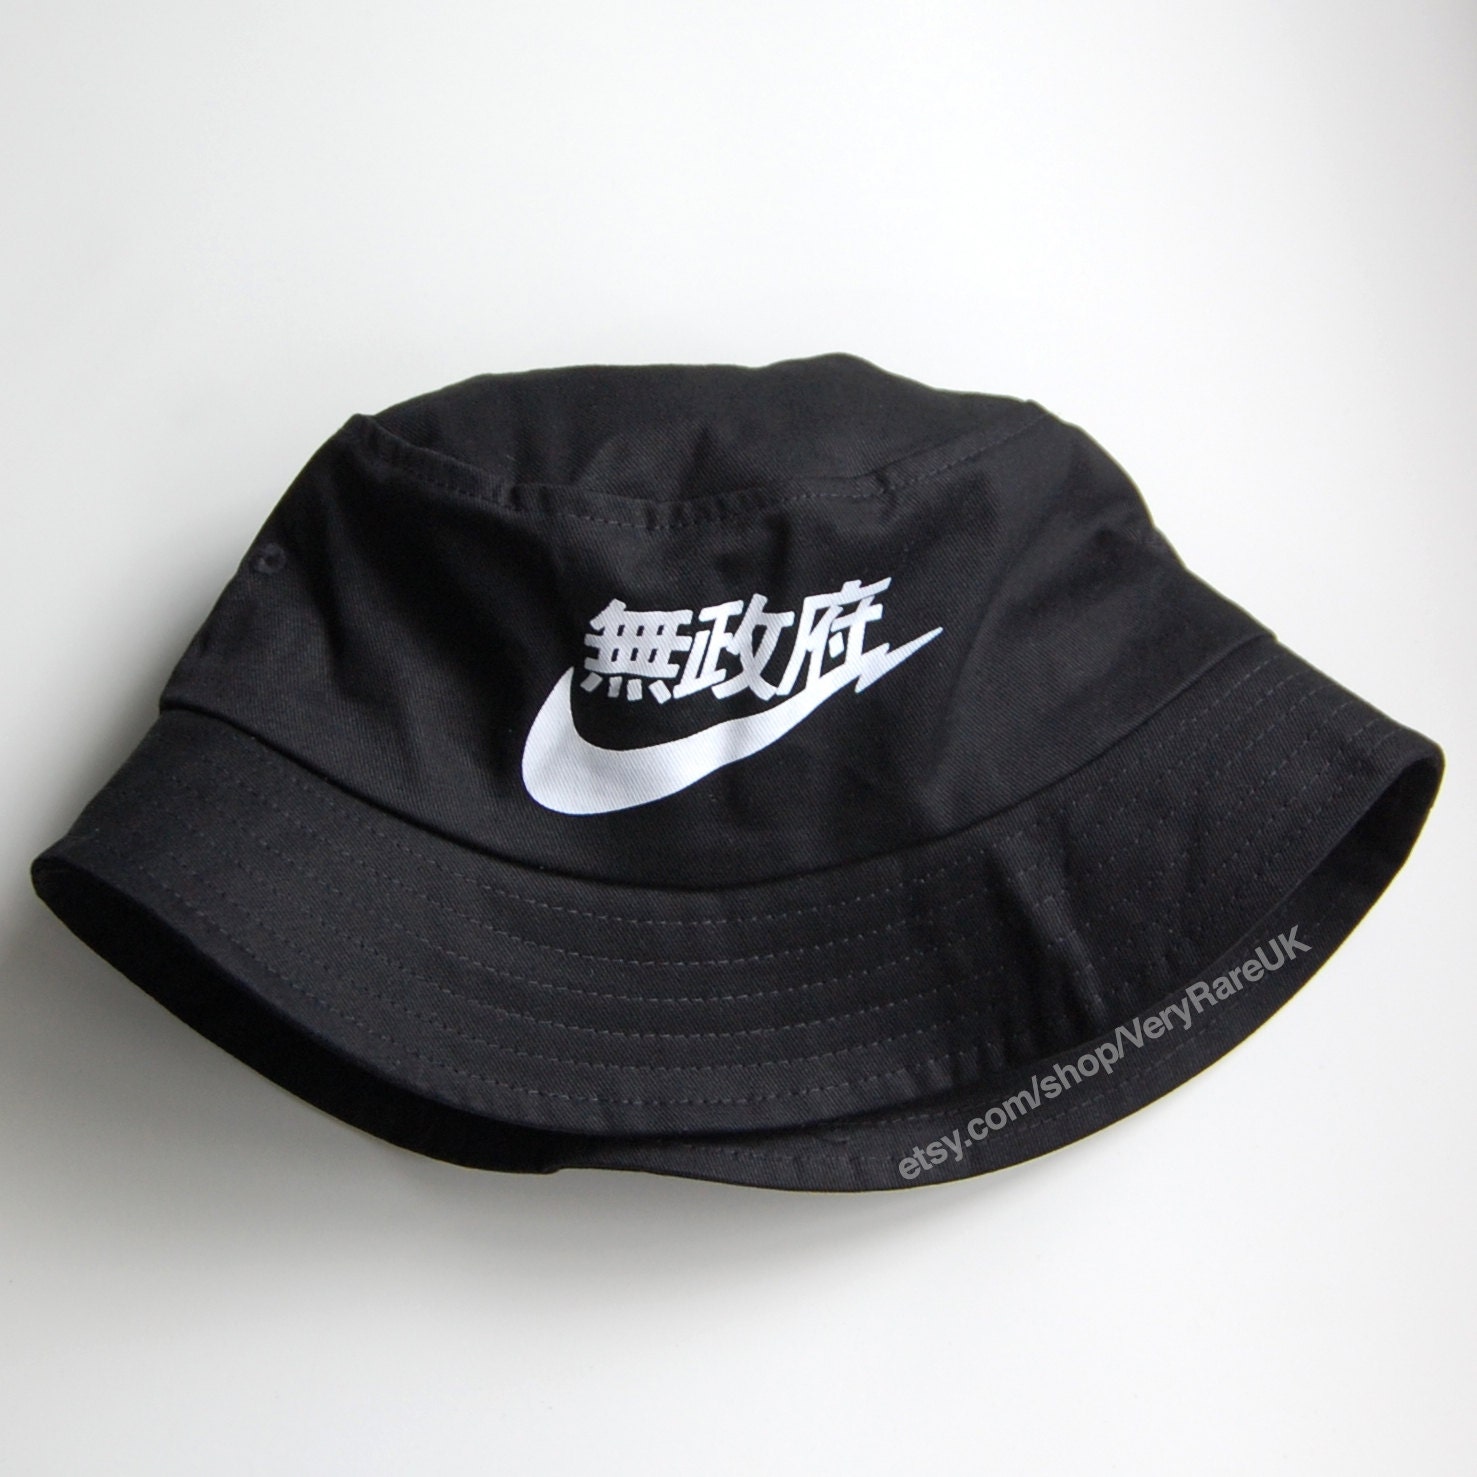 Air Tokyo Bucket Hat Very Rare Nike Inspired by VeryRareUK on Etsy